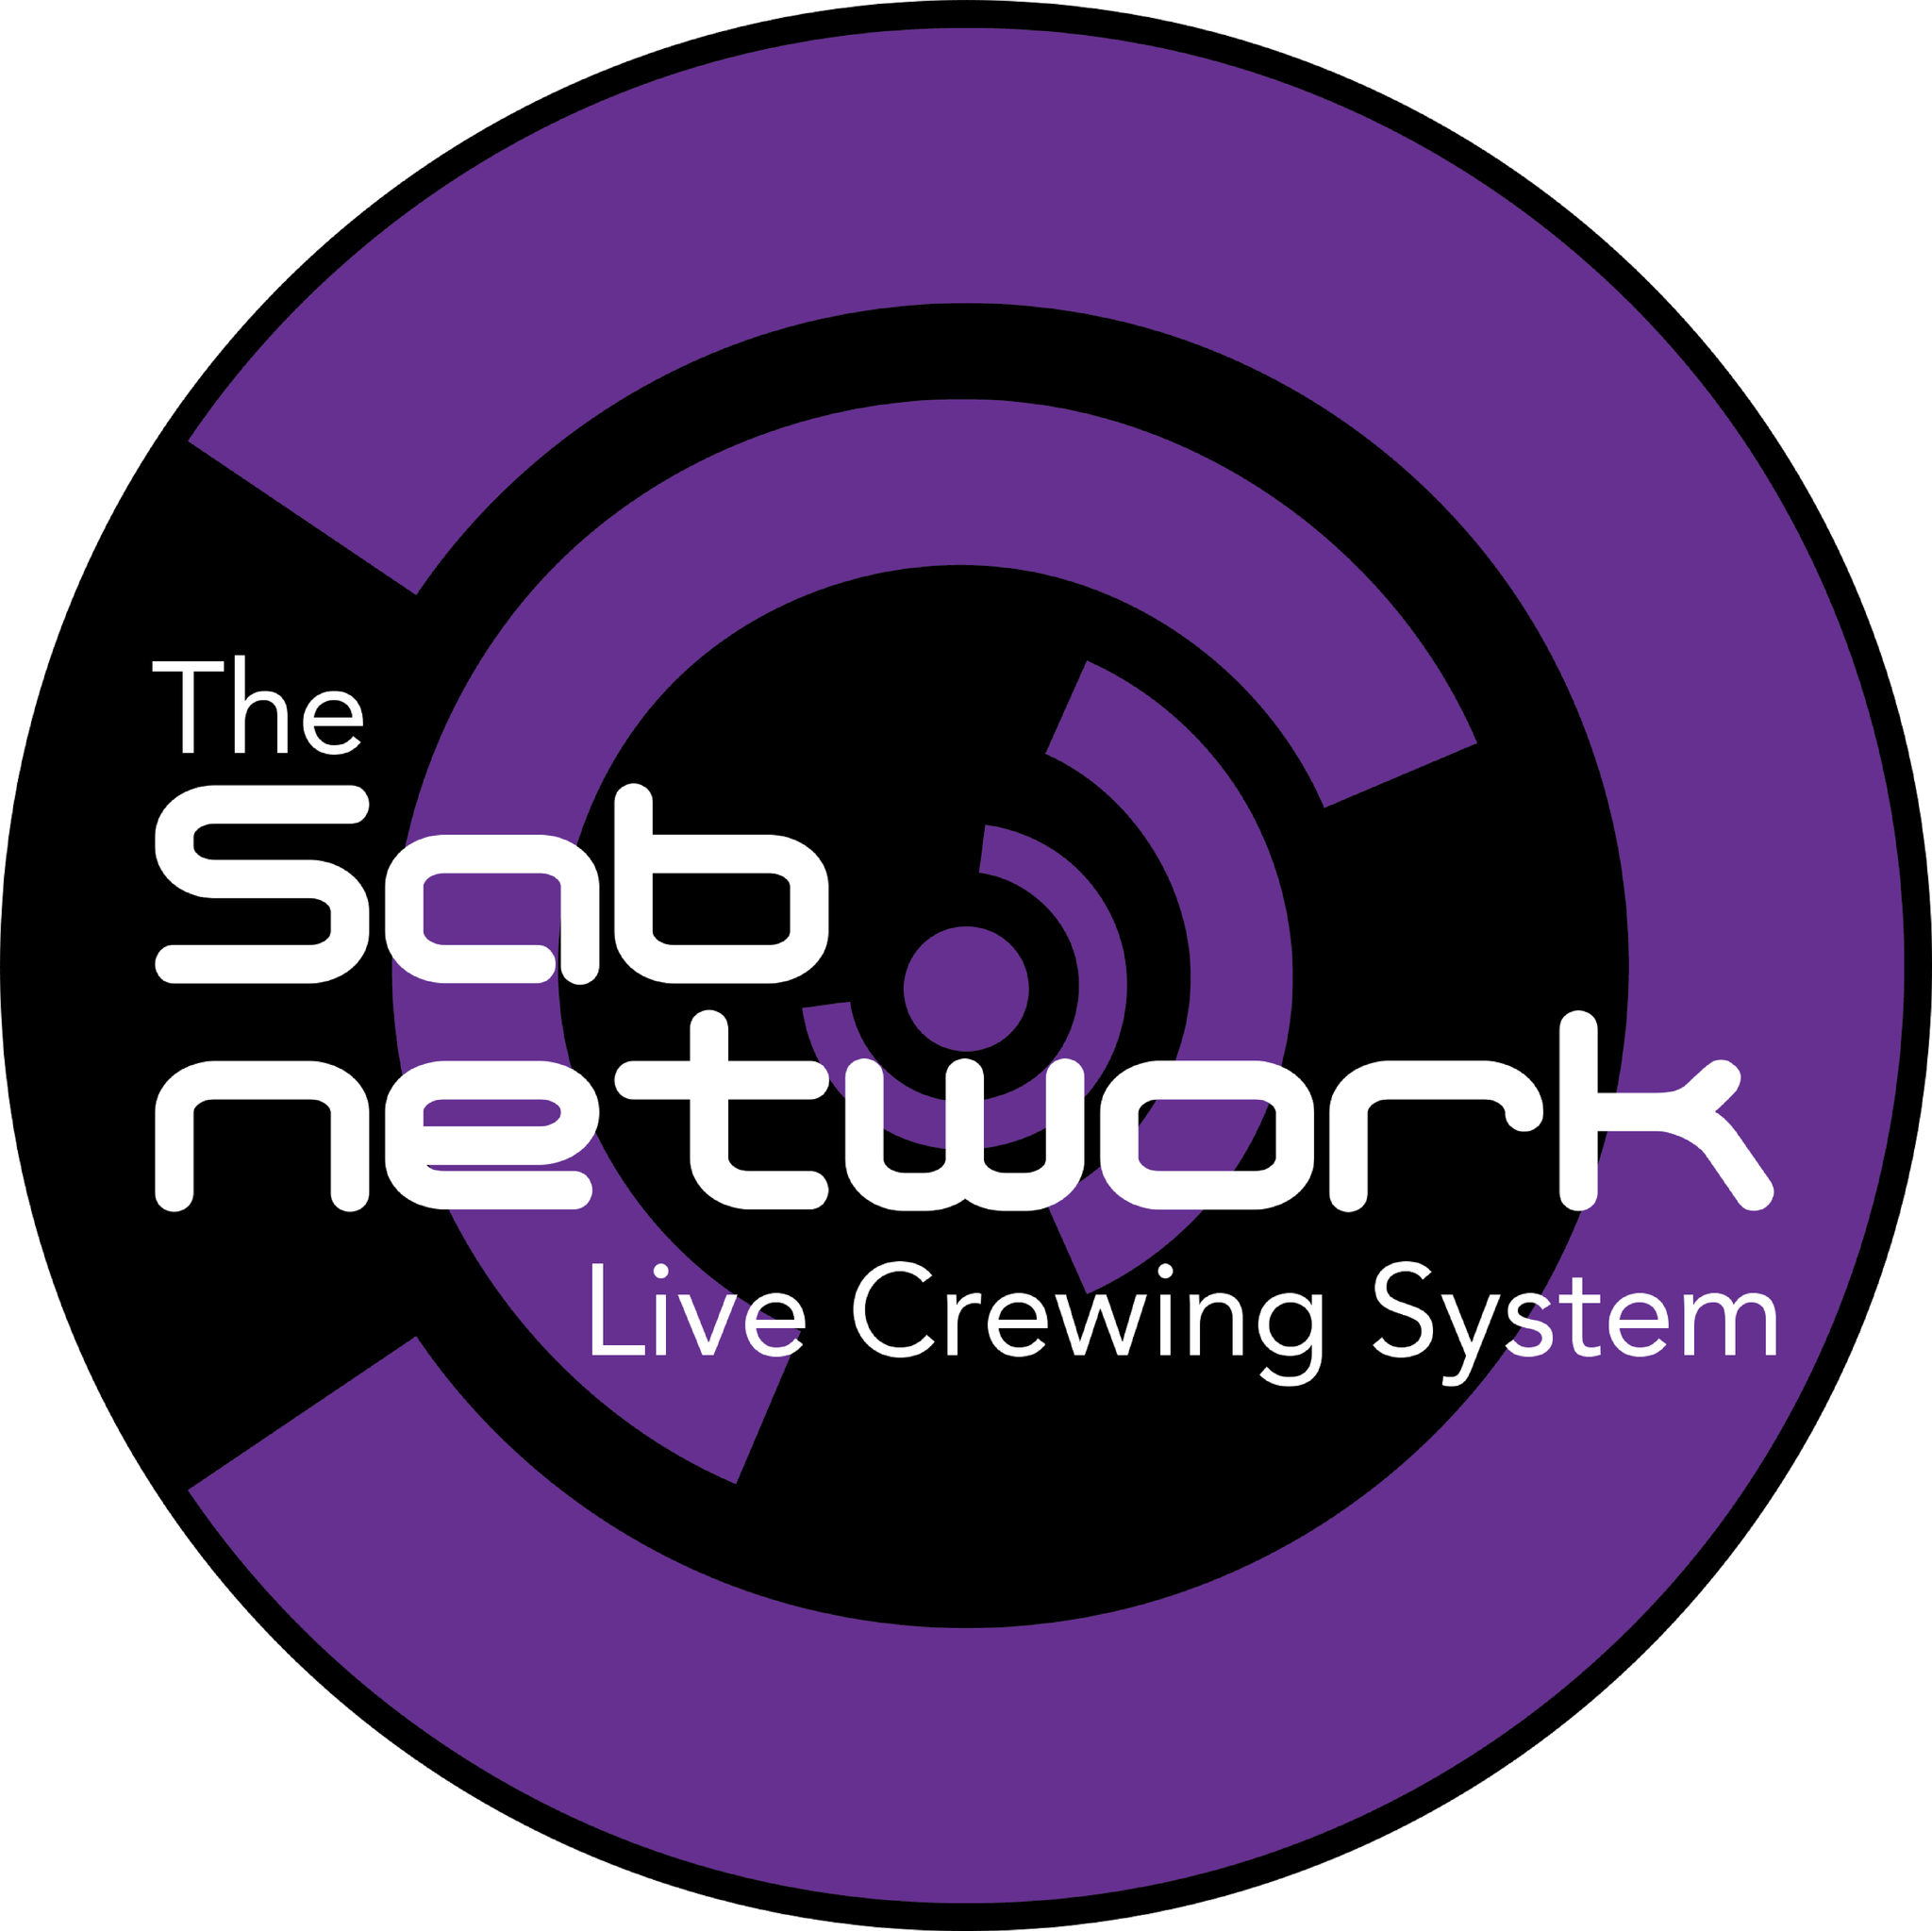 The Sab Network